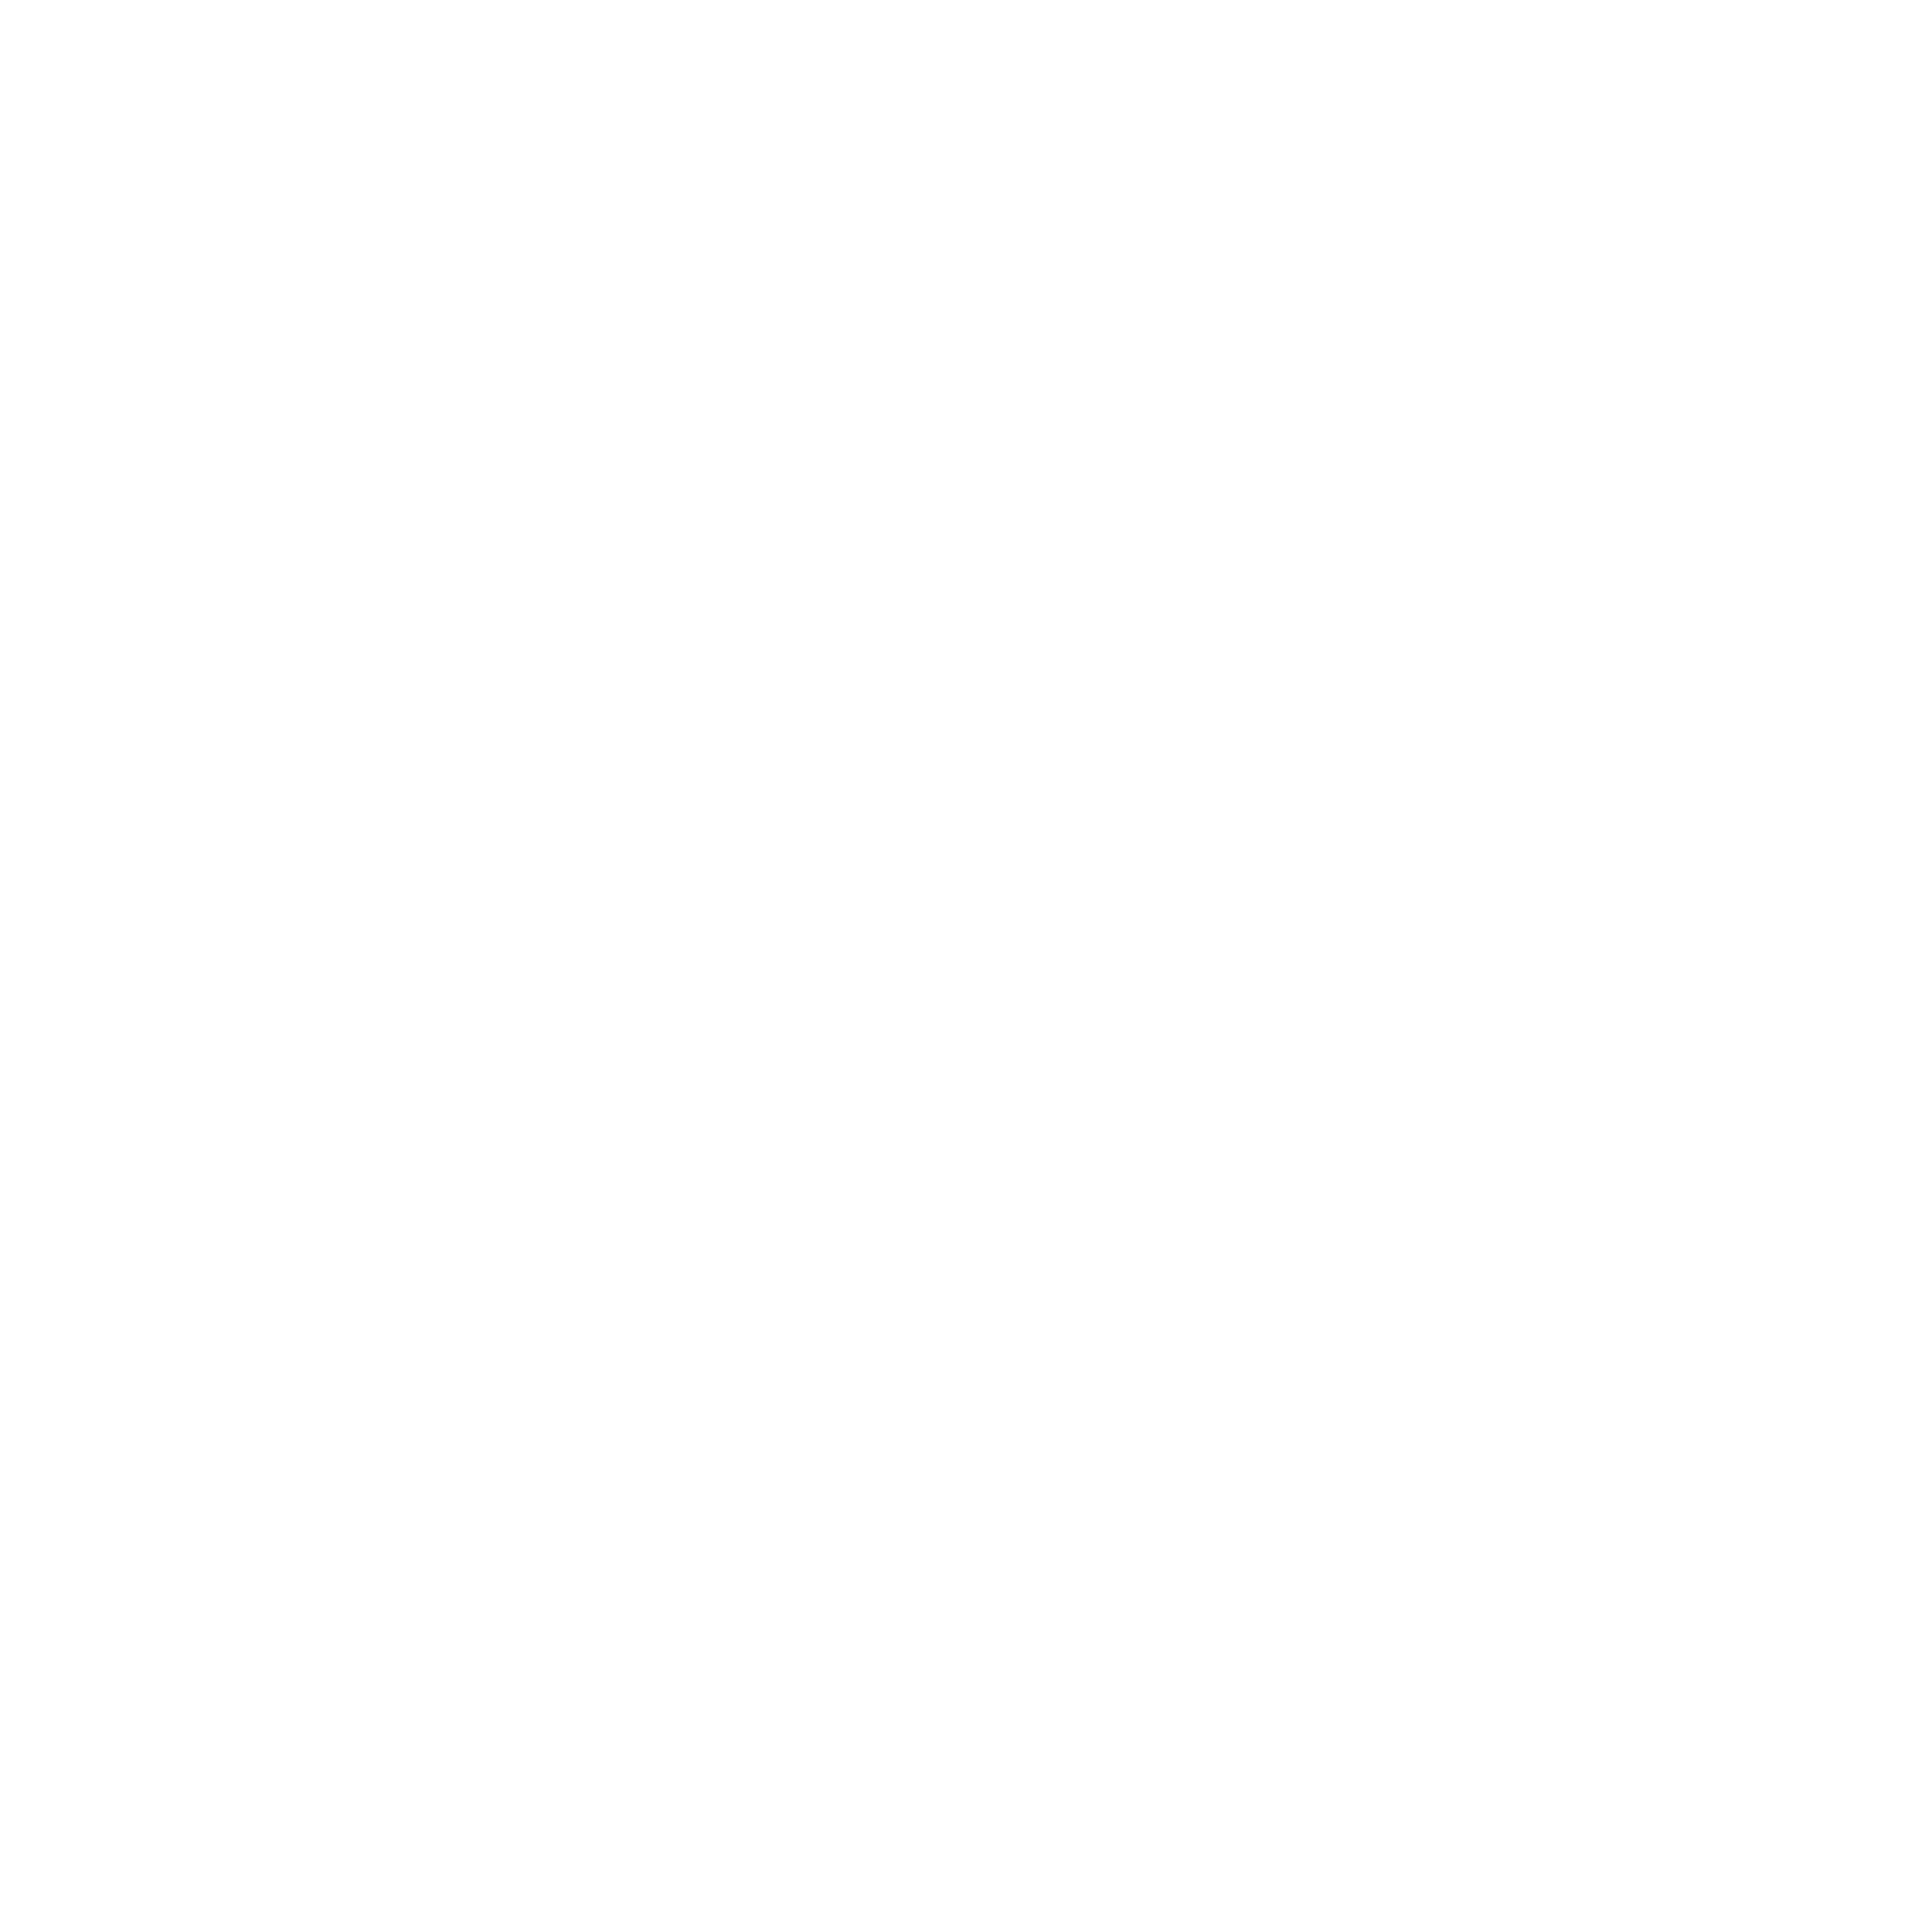 Inmarsat Logo - Inmarsat Logo PNG Transparent & SVG Vector - Freebie Supply